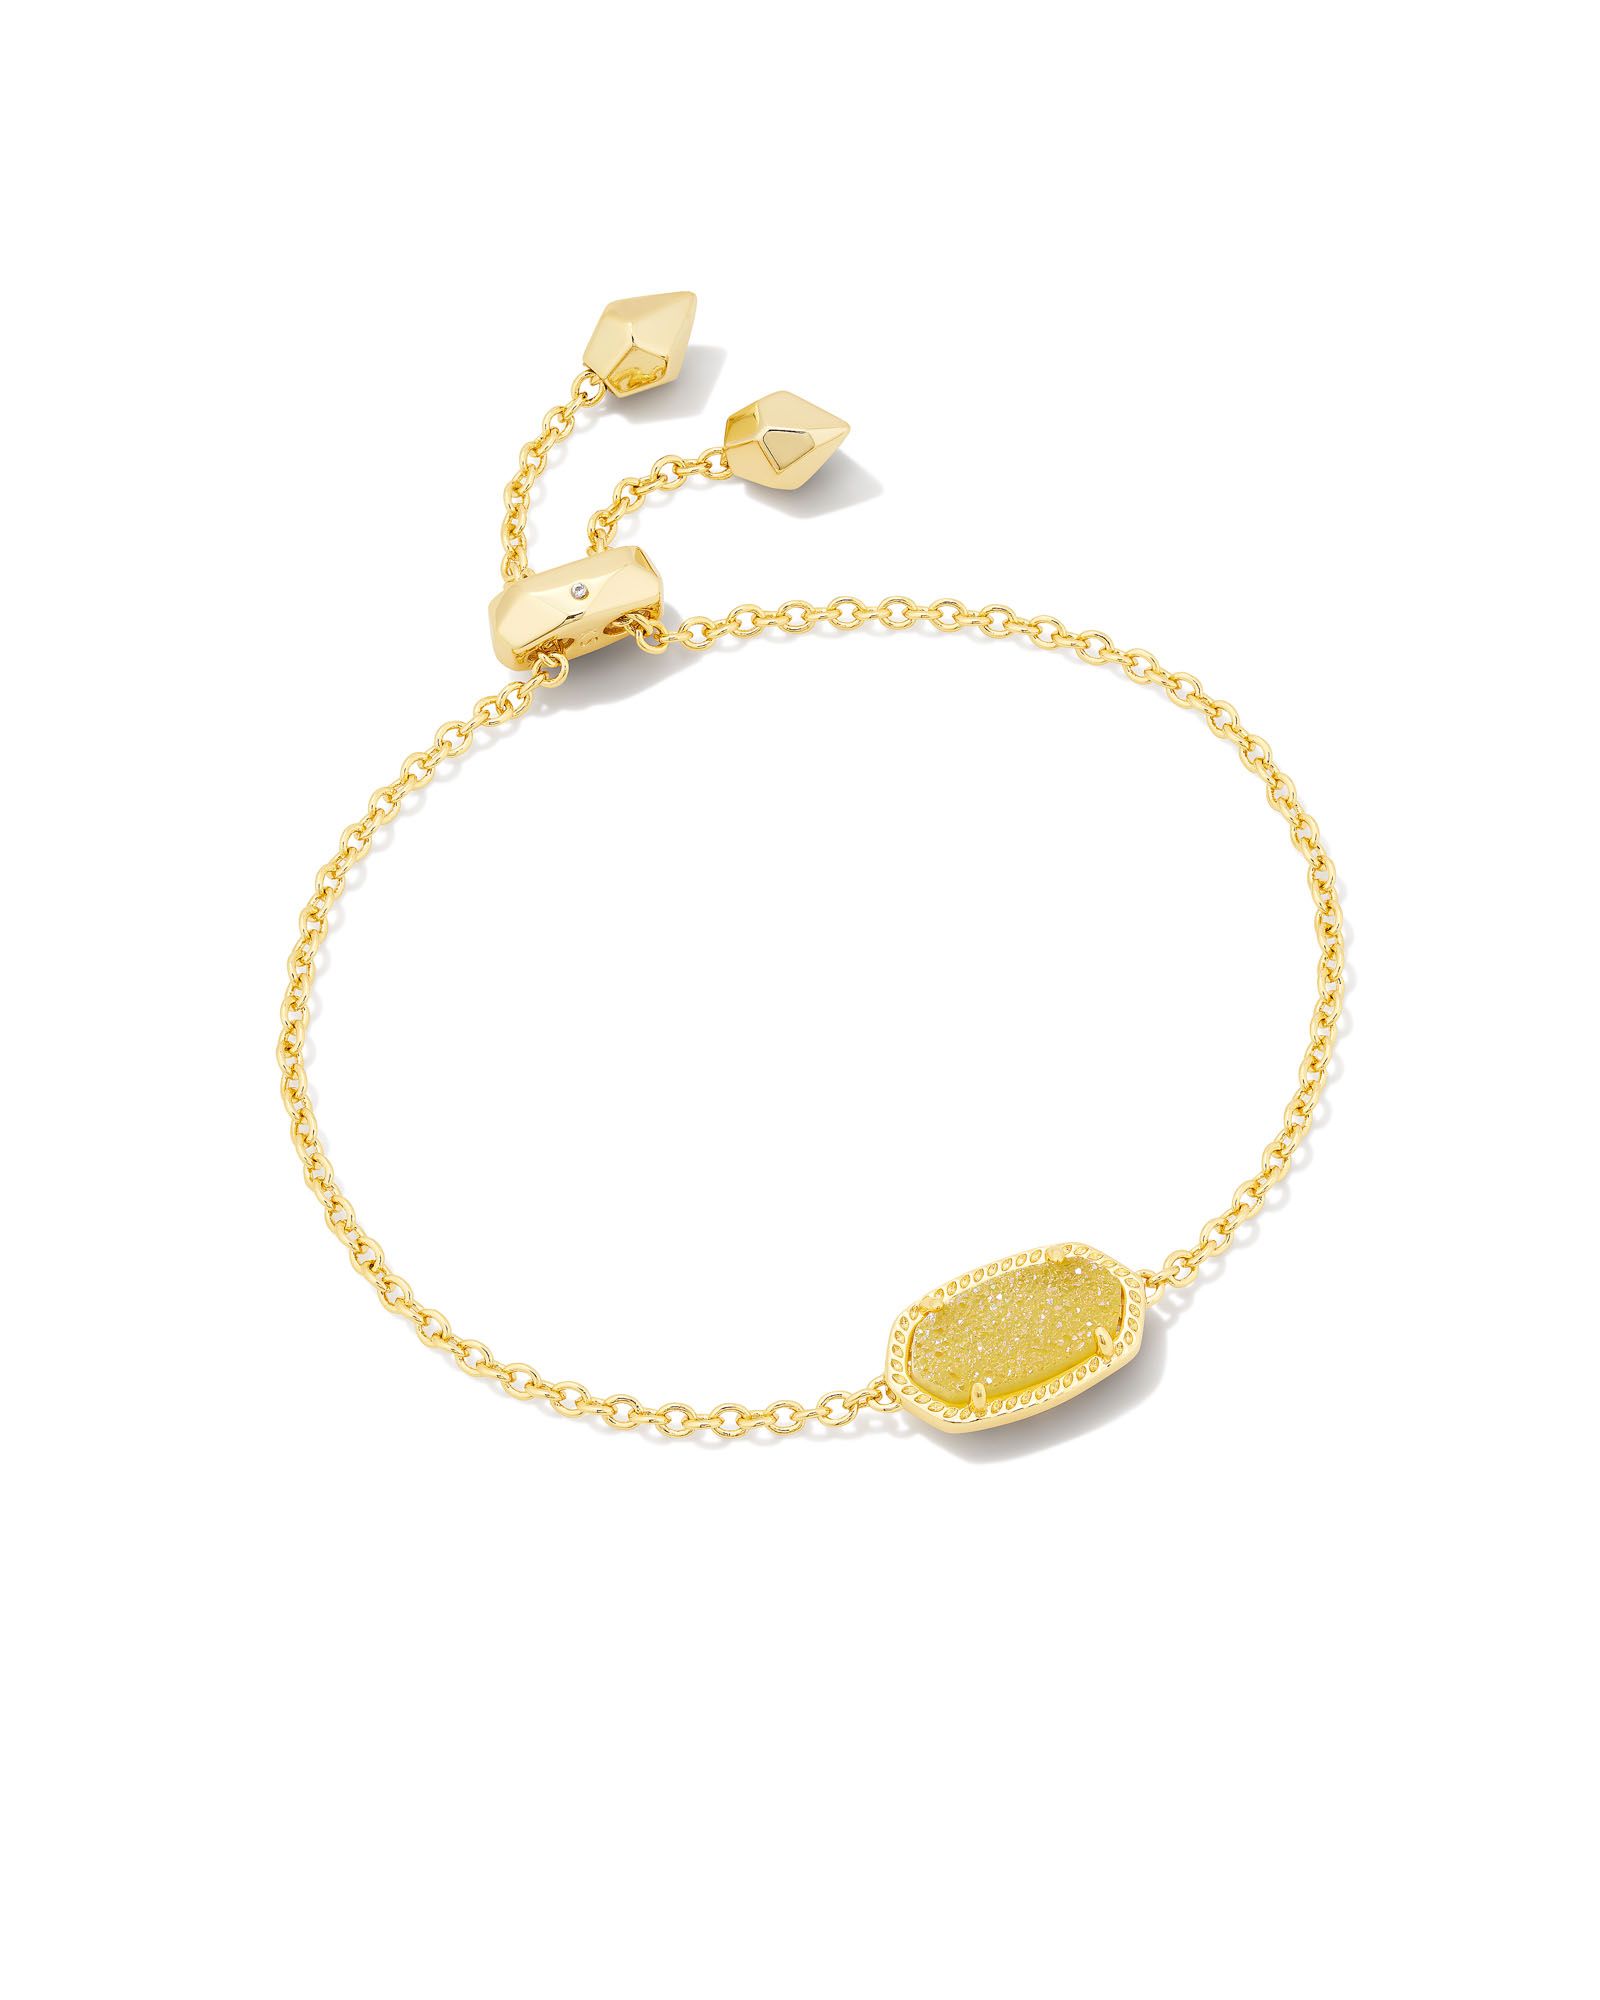 Elaina Gold Delicate Chain Bracelet in Light Yellow Drusy | Kendra Scott